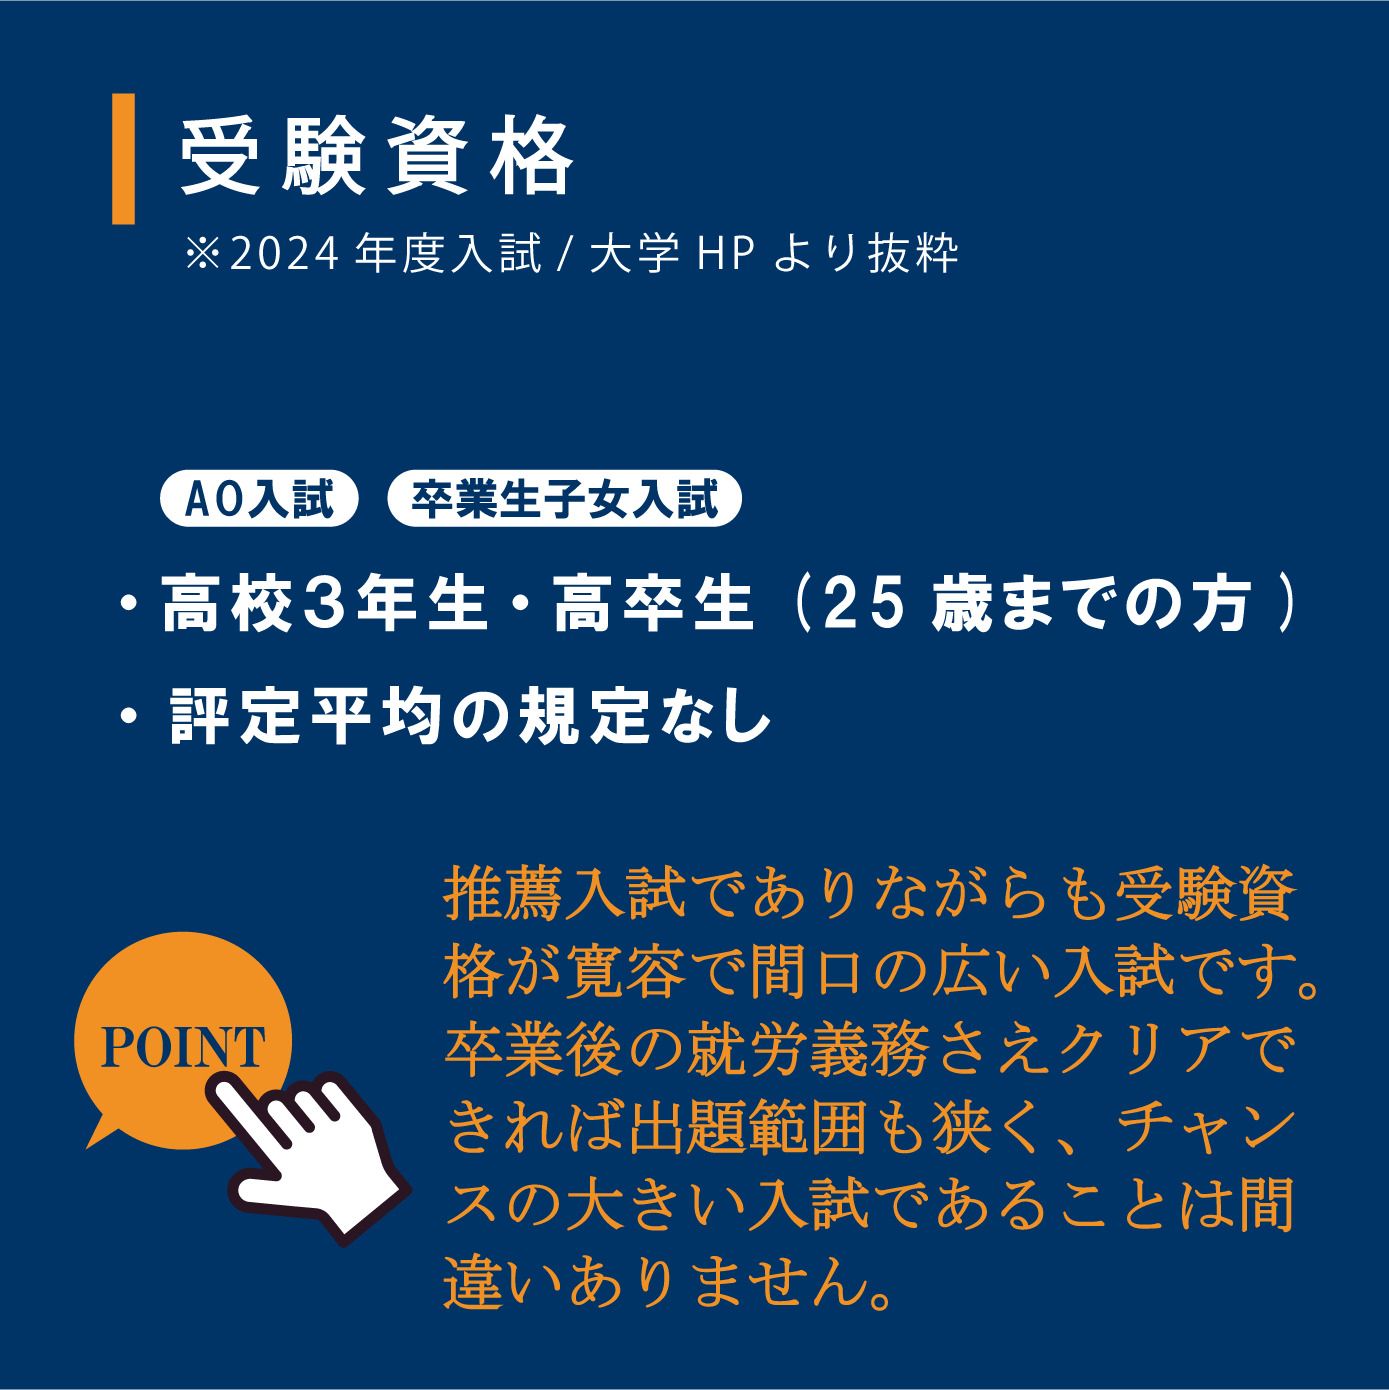 金沢医科大学AO入試コース・受験資格